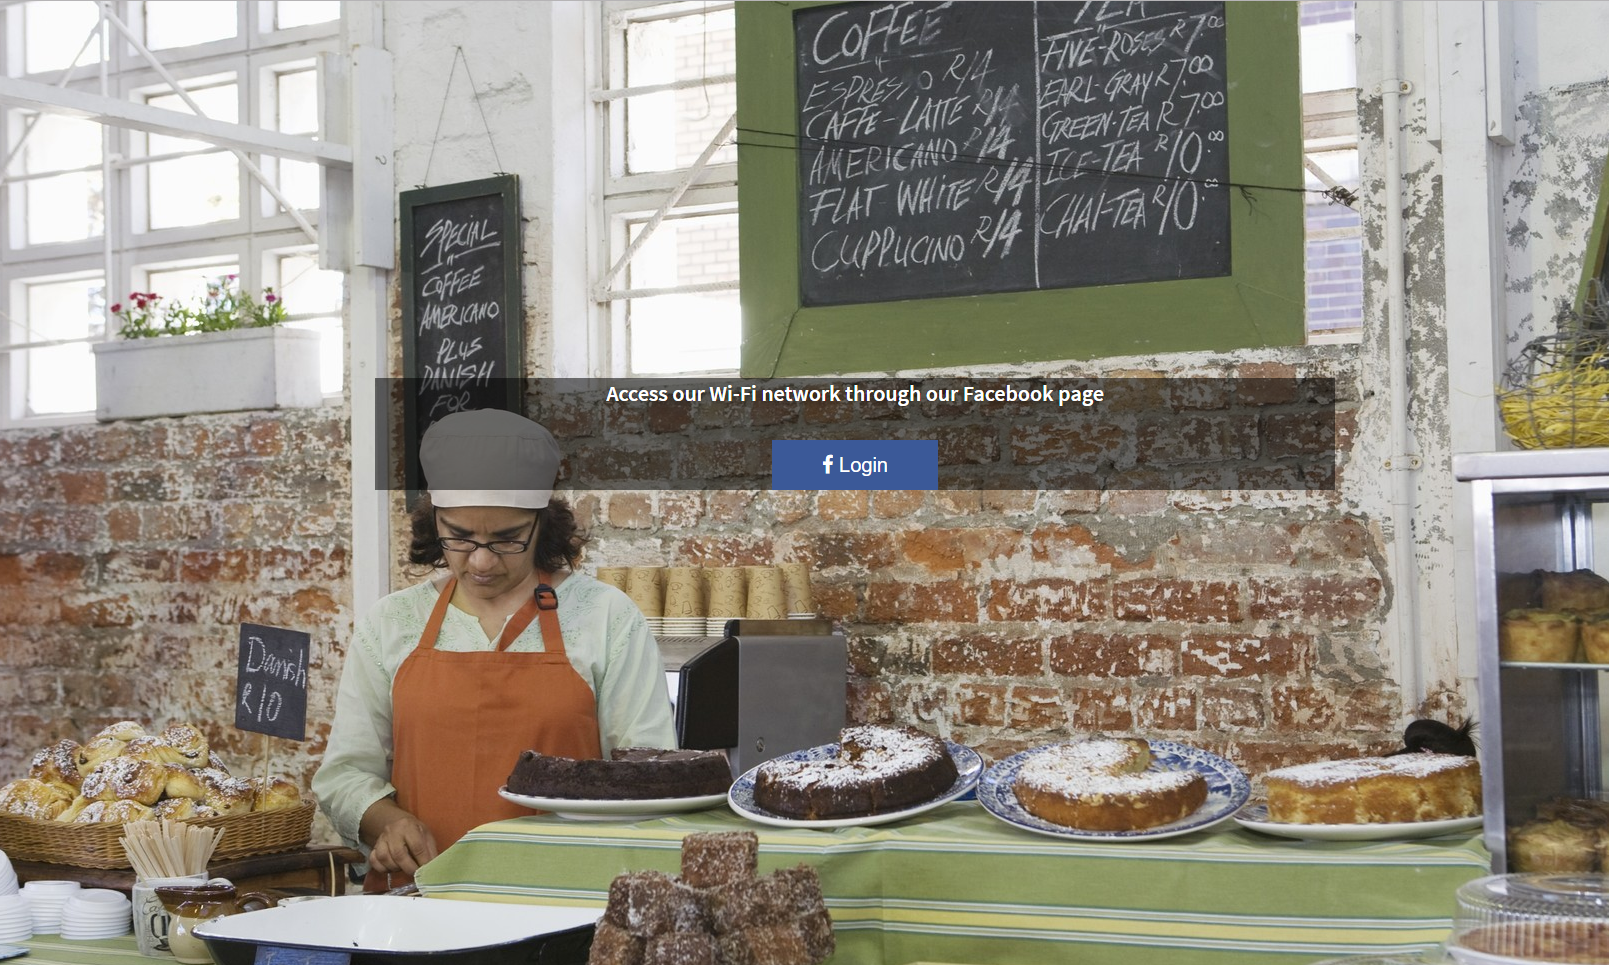 Tanaza Splash page 5: Facebook login authentication for a café